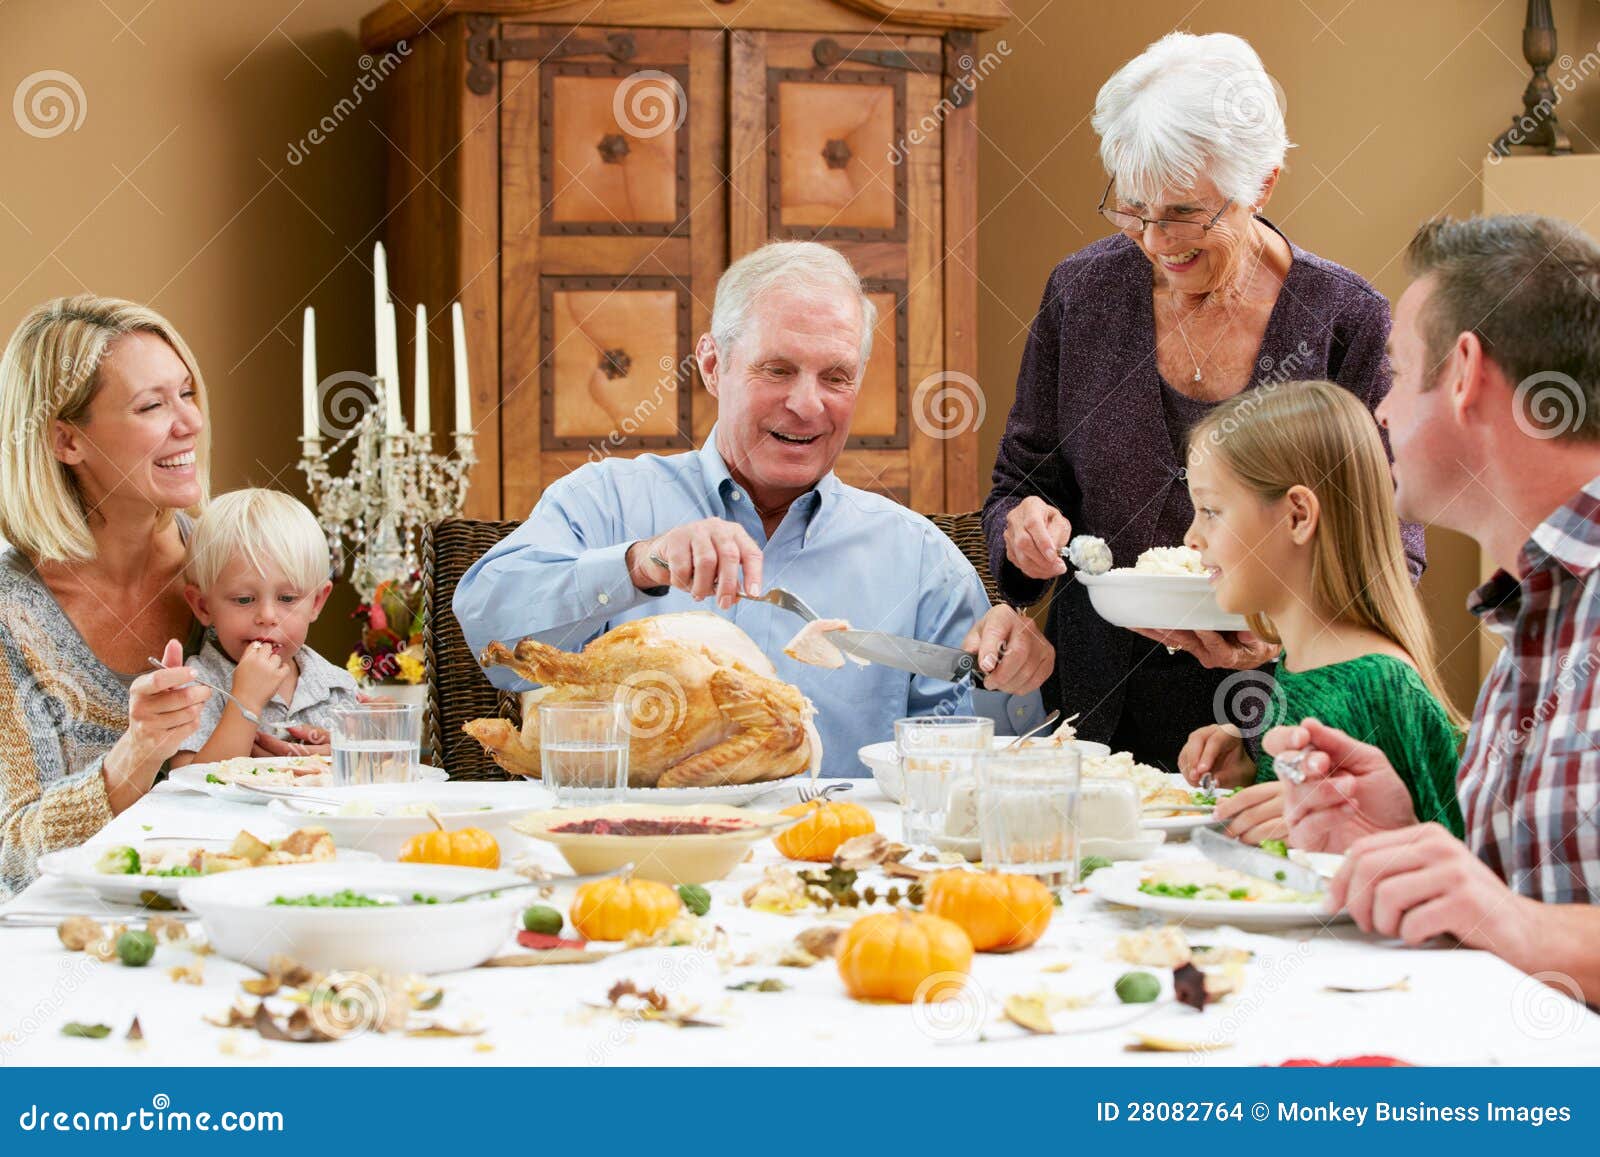 Multi Generation Family Celebrating Thanksgiving Stock Photo - Image of ...